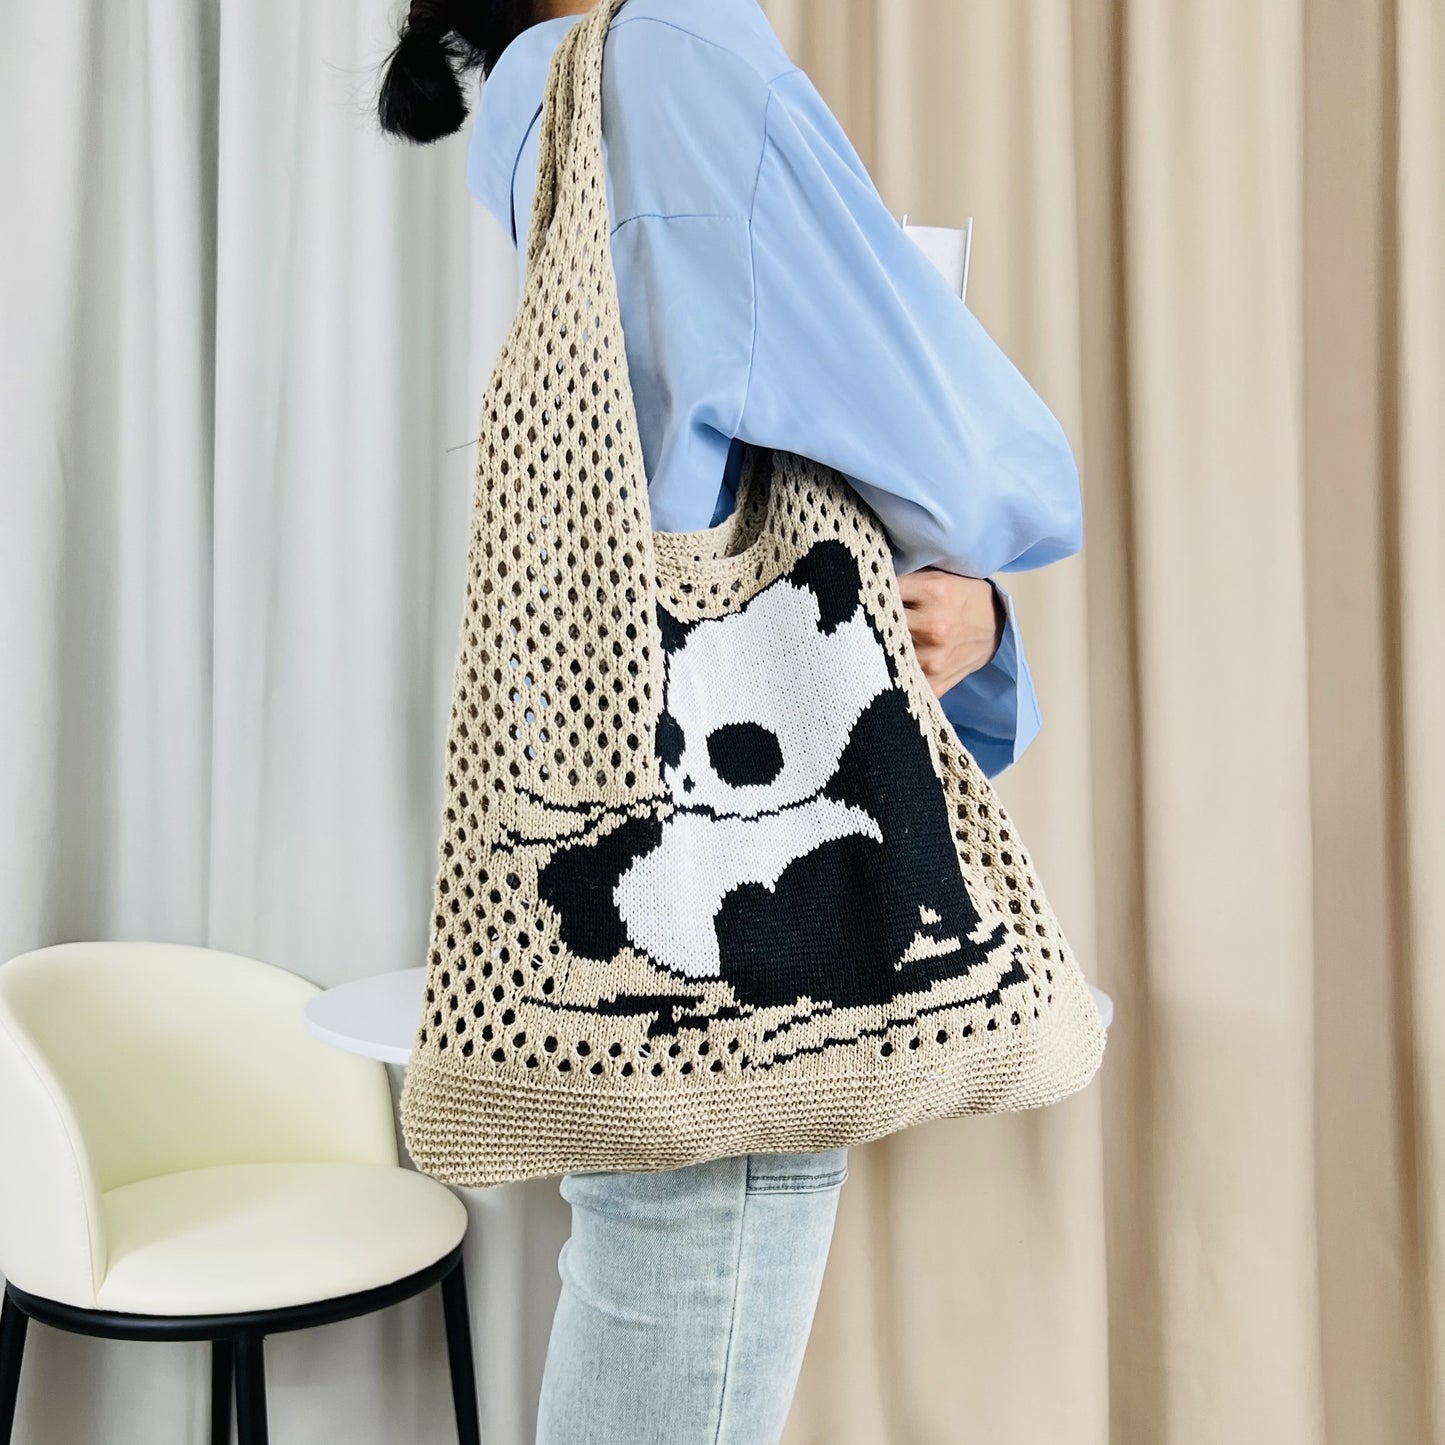 Bolso tote Panda: Lindo bolso de crochet en 5 colores encantadores